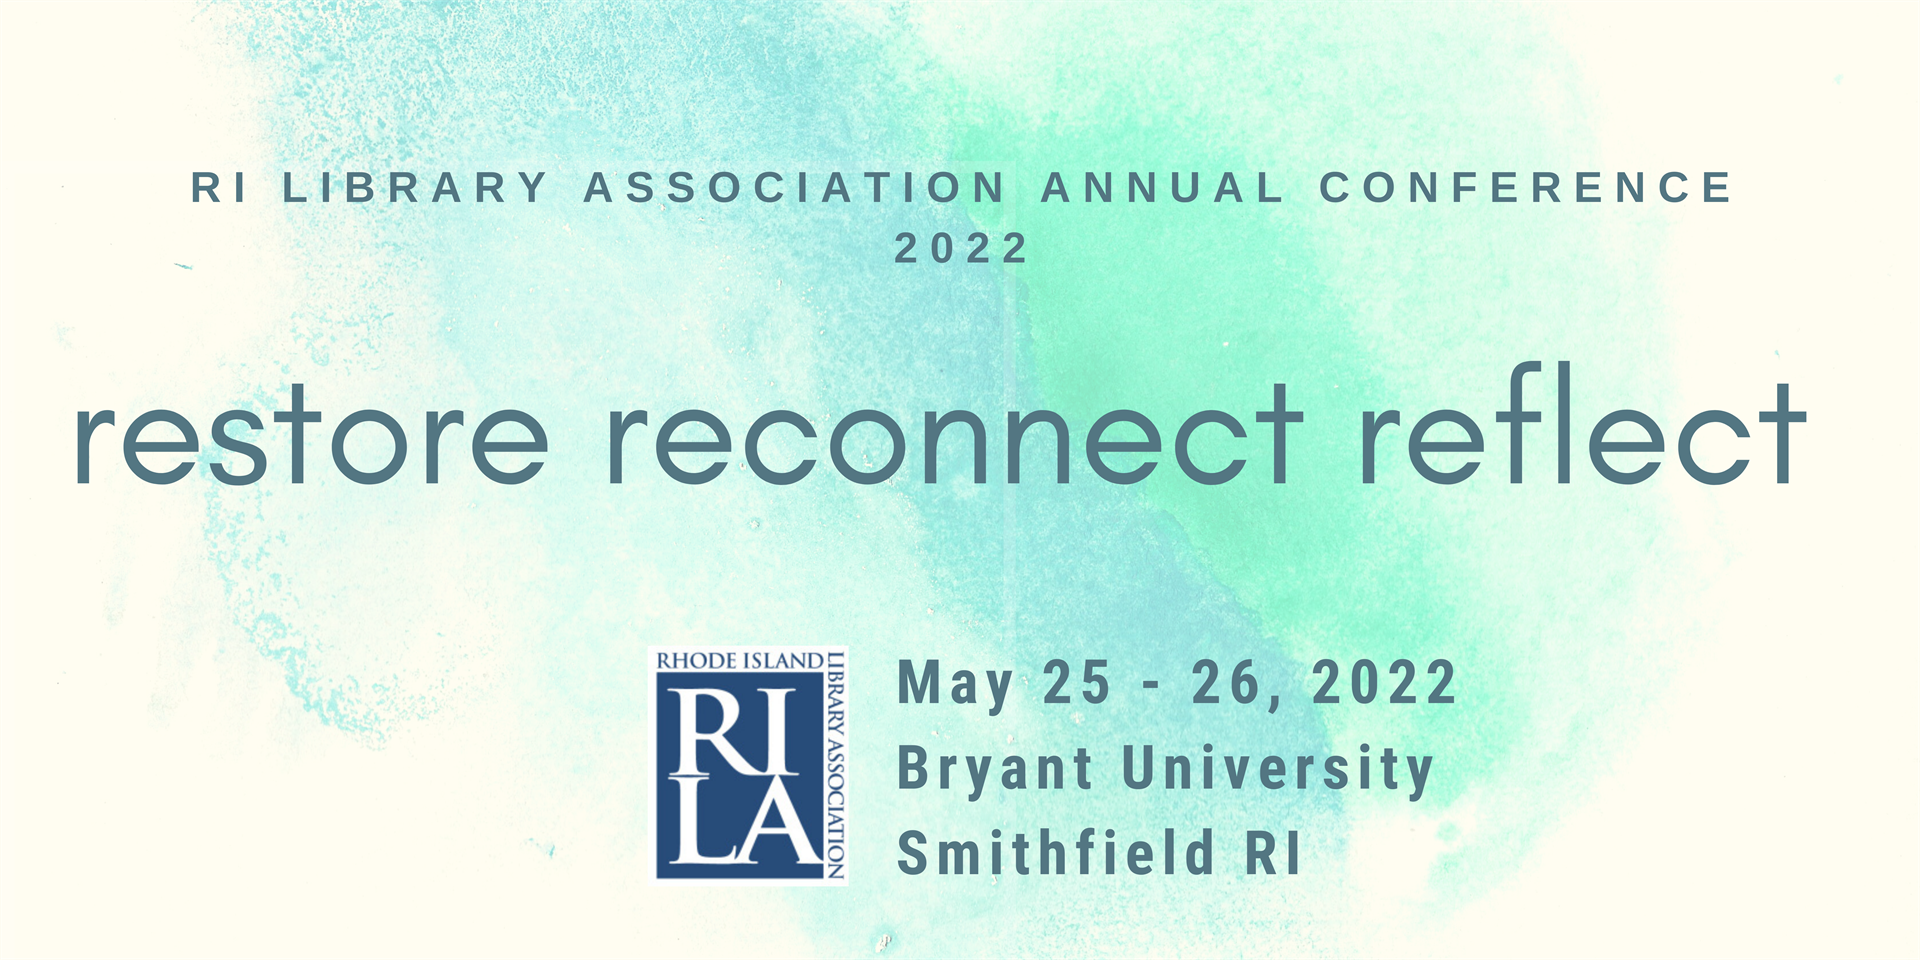 RI Library Association Annual Conference 2022. Restore Reconnect Reflect. May 25 - 26, 2022, Bryant University, Smithfield RI. [RILA Logo]